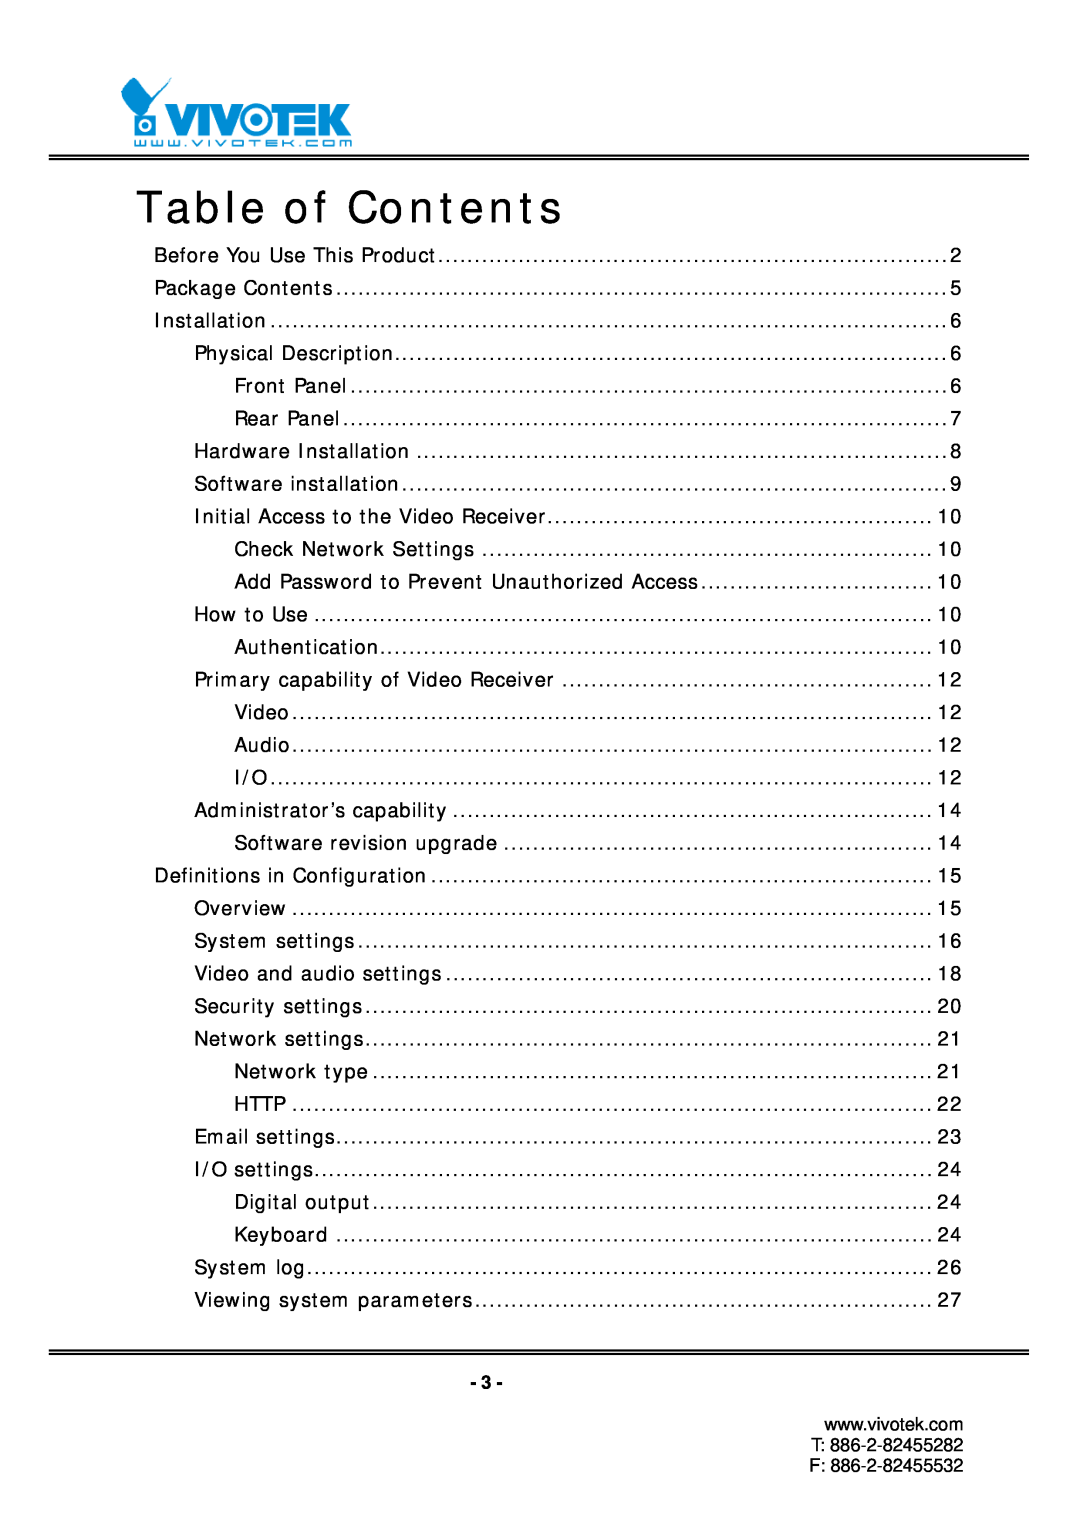 Vivotek RX7101 manual Table of Contents 